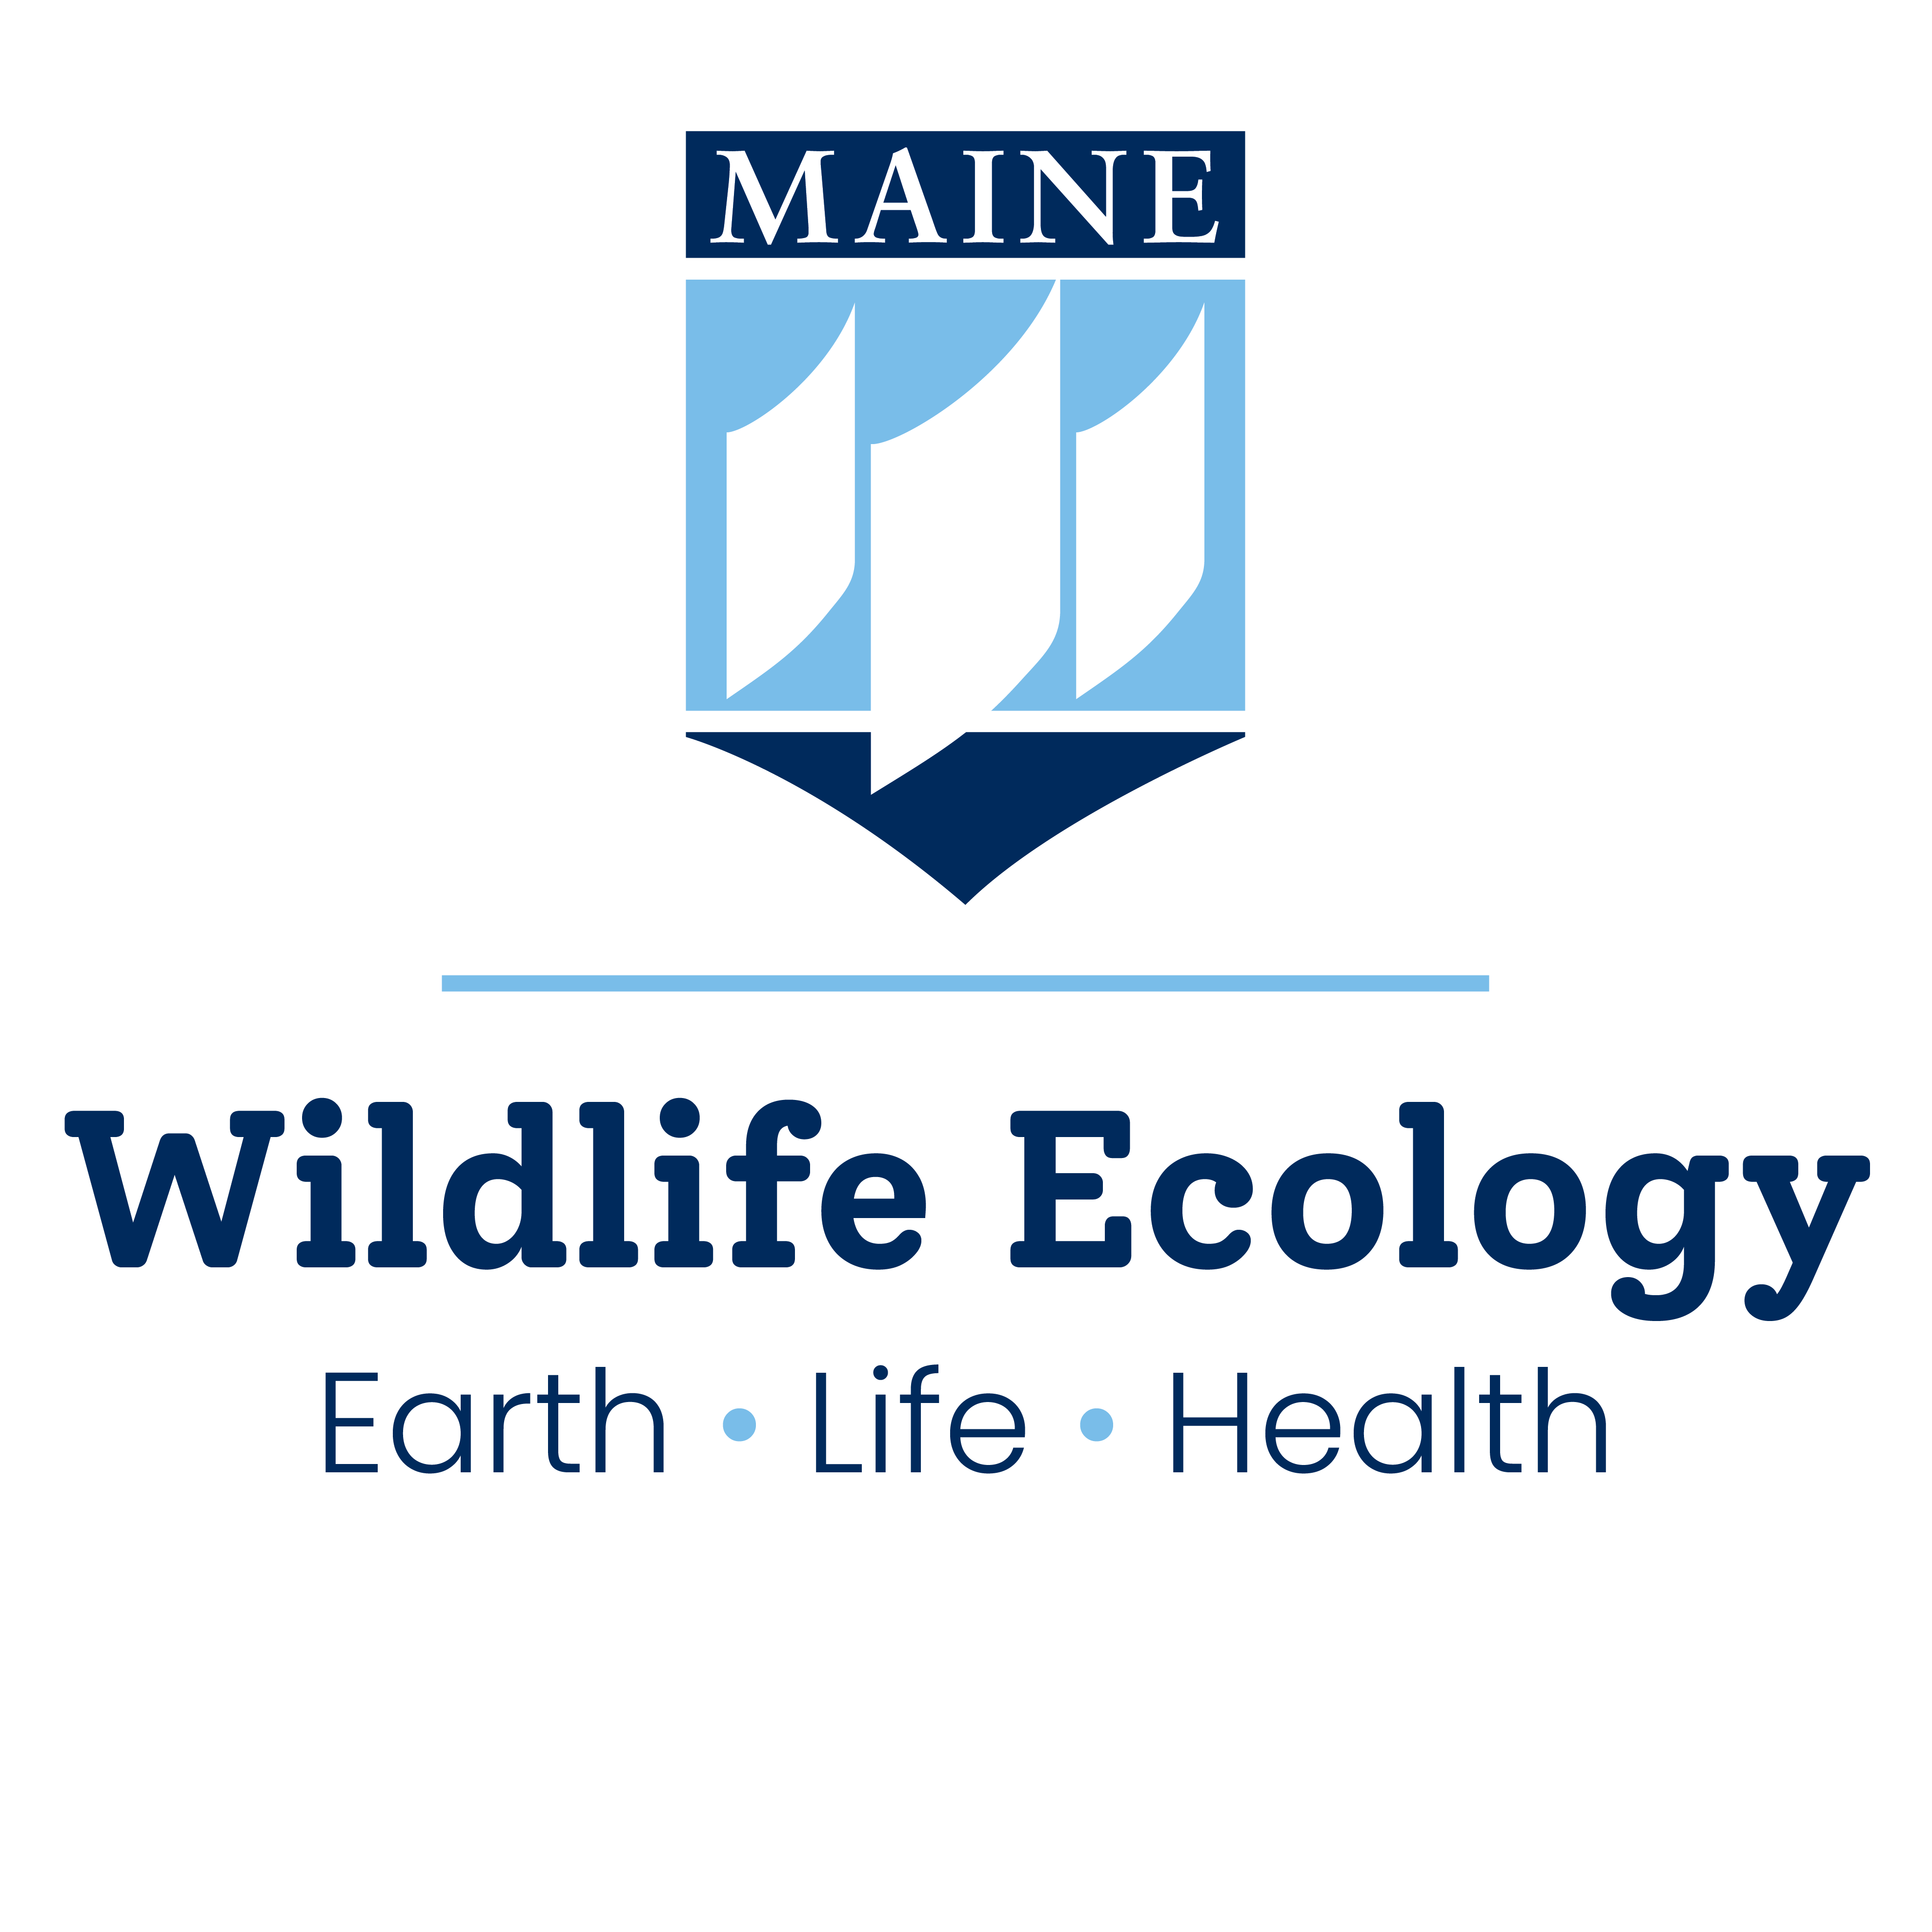 UMaine crest, wildlife ecology, earth • life • health